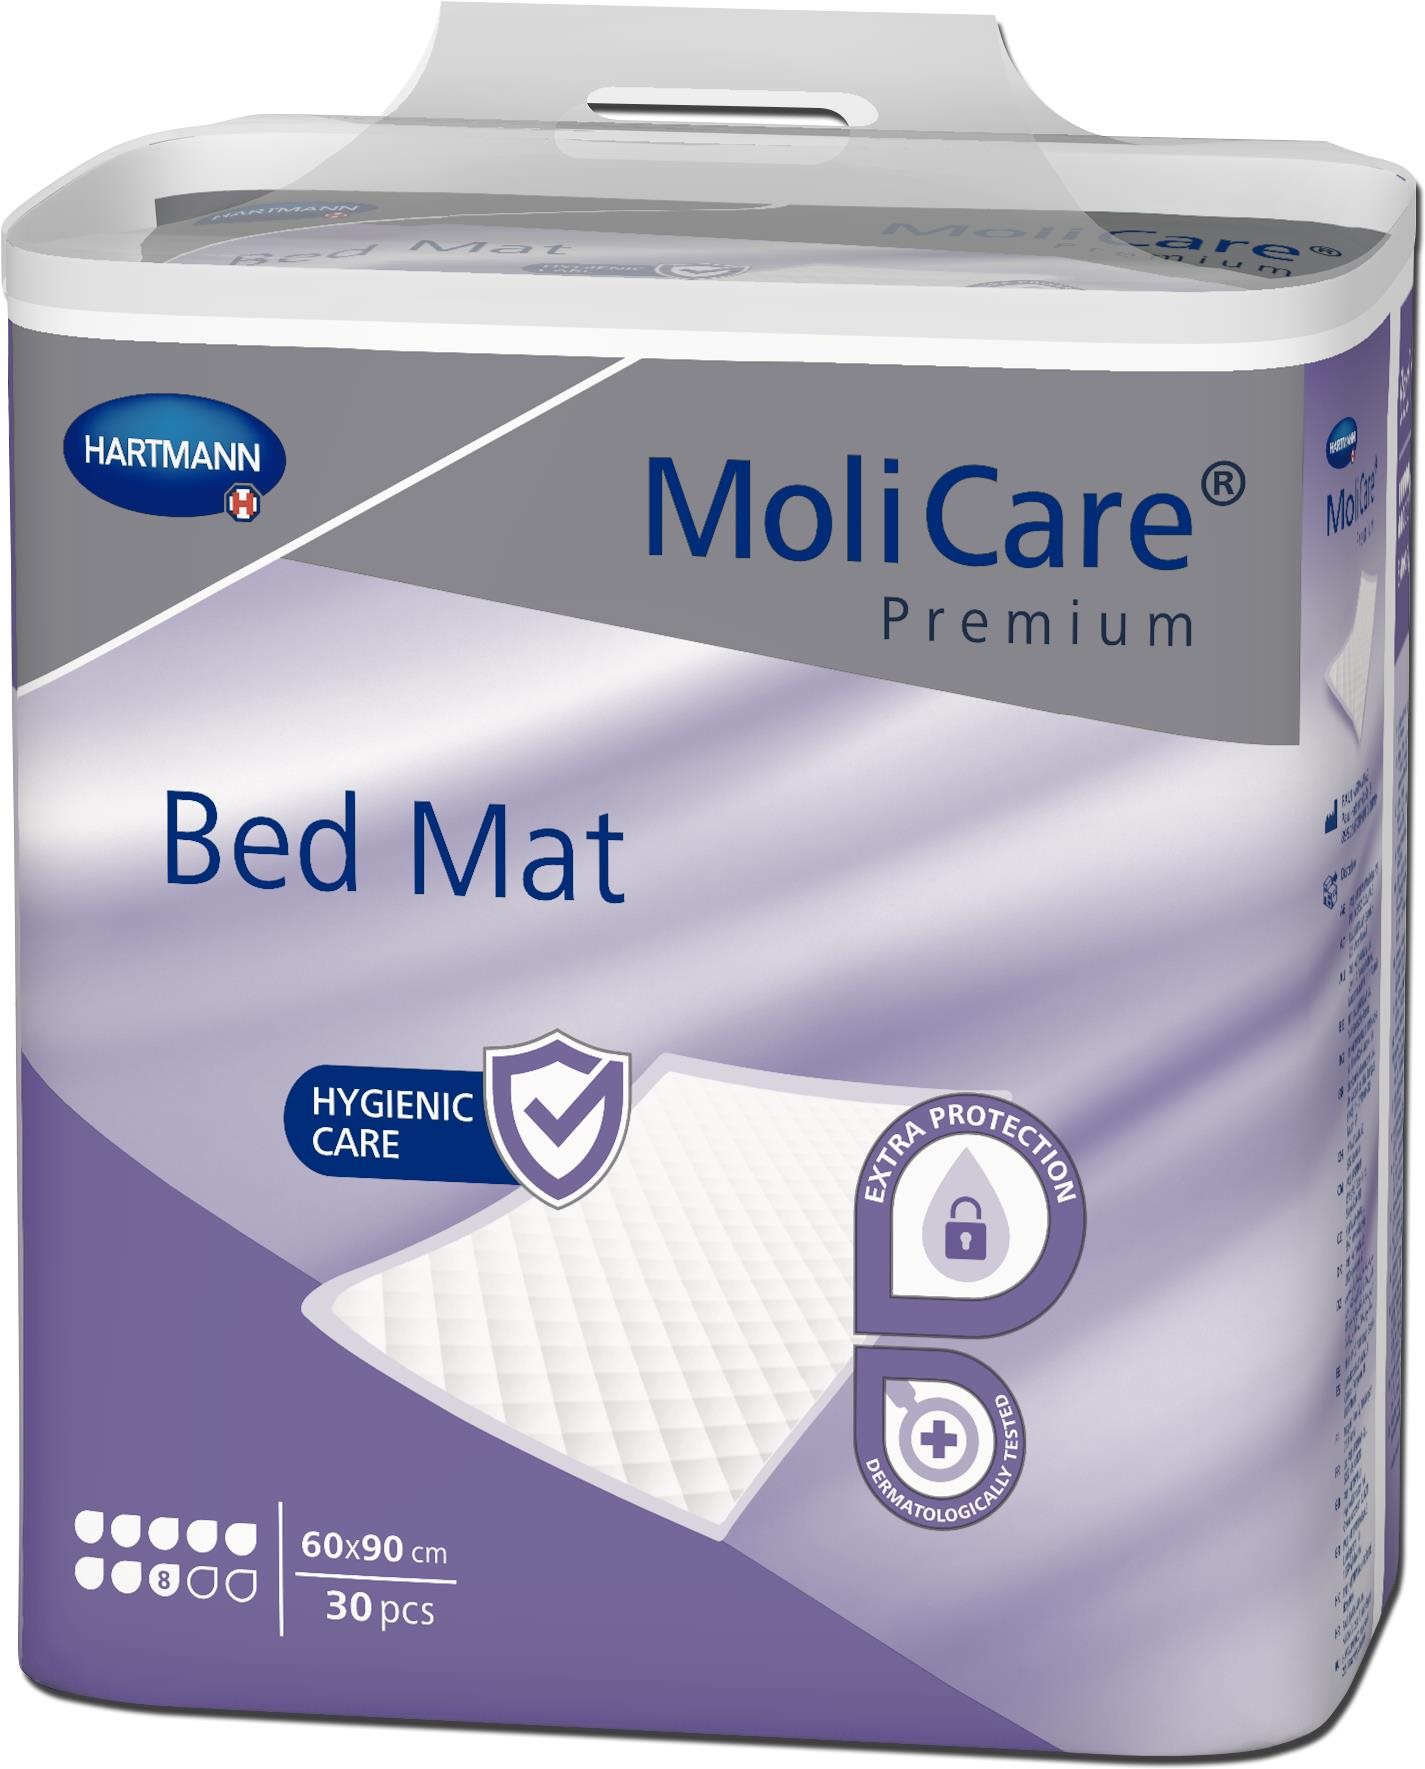 MoliCare Bed Mat 8 csepp 90 x 60 cm, 30 db